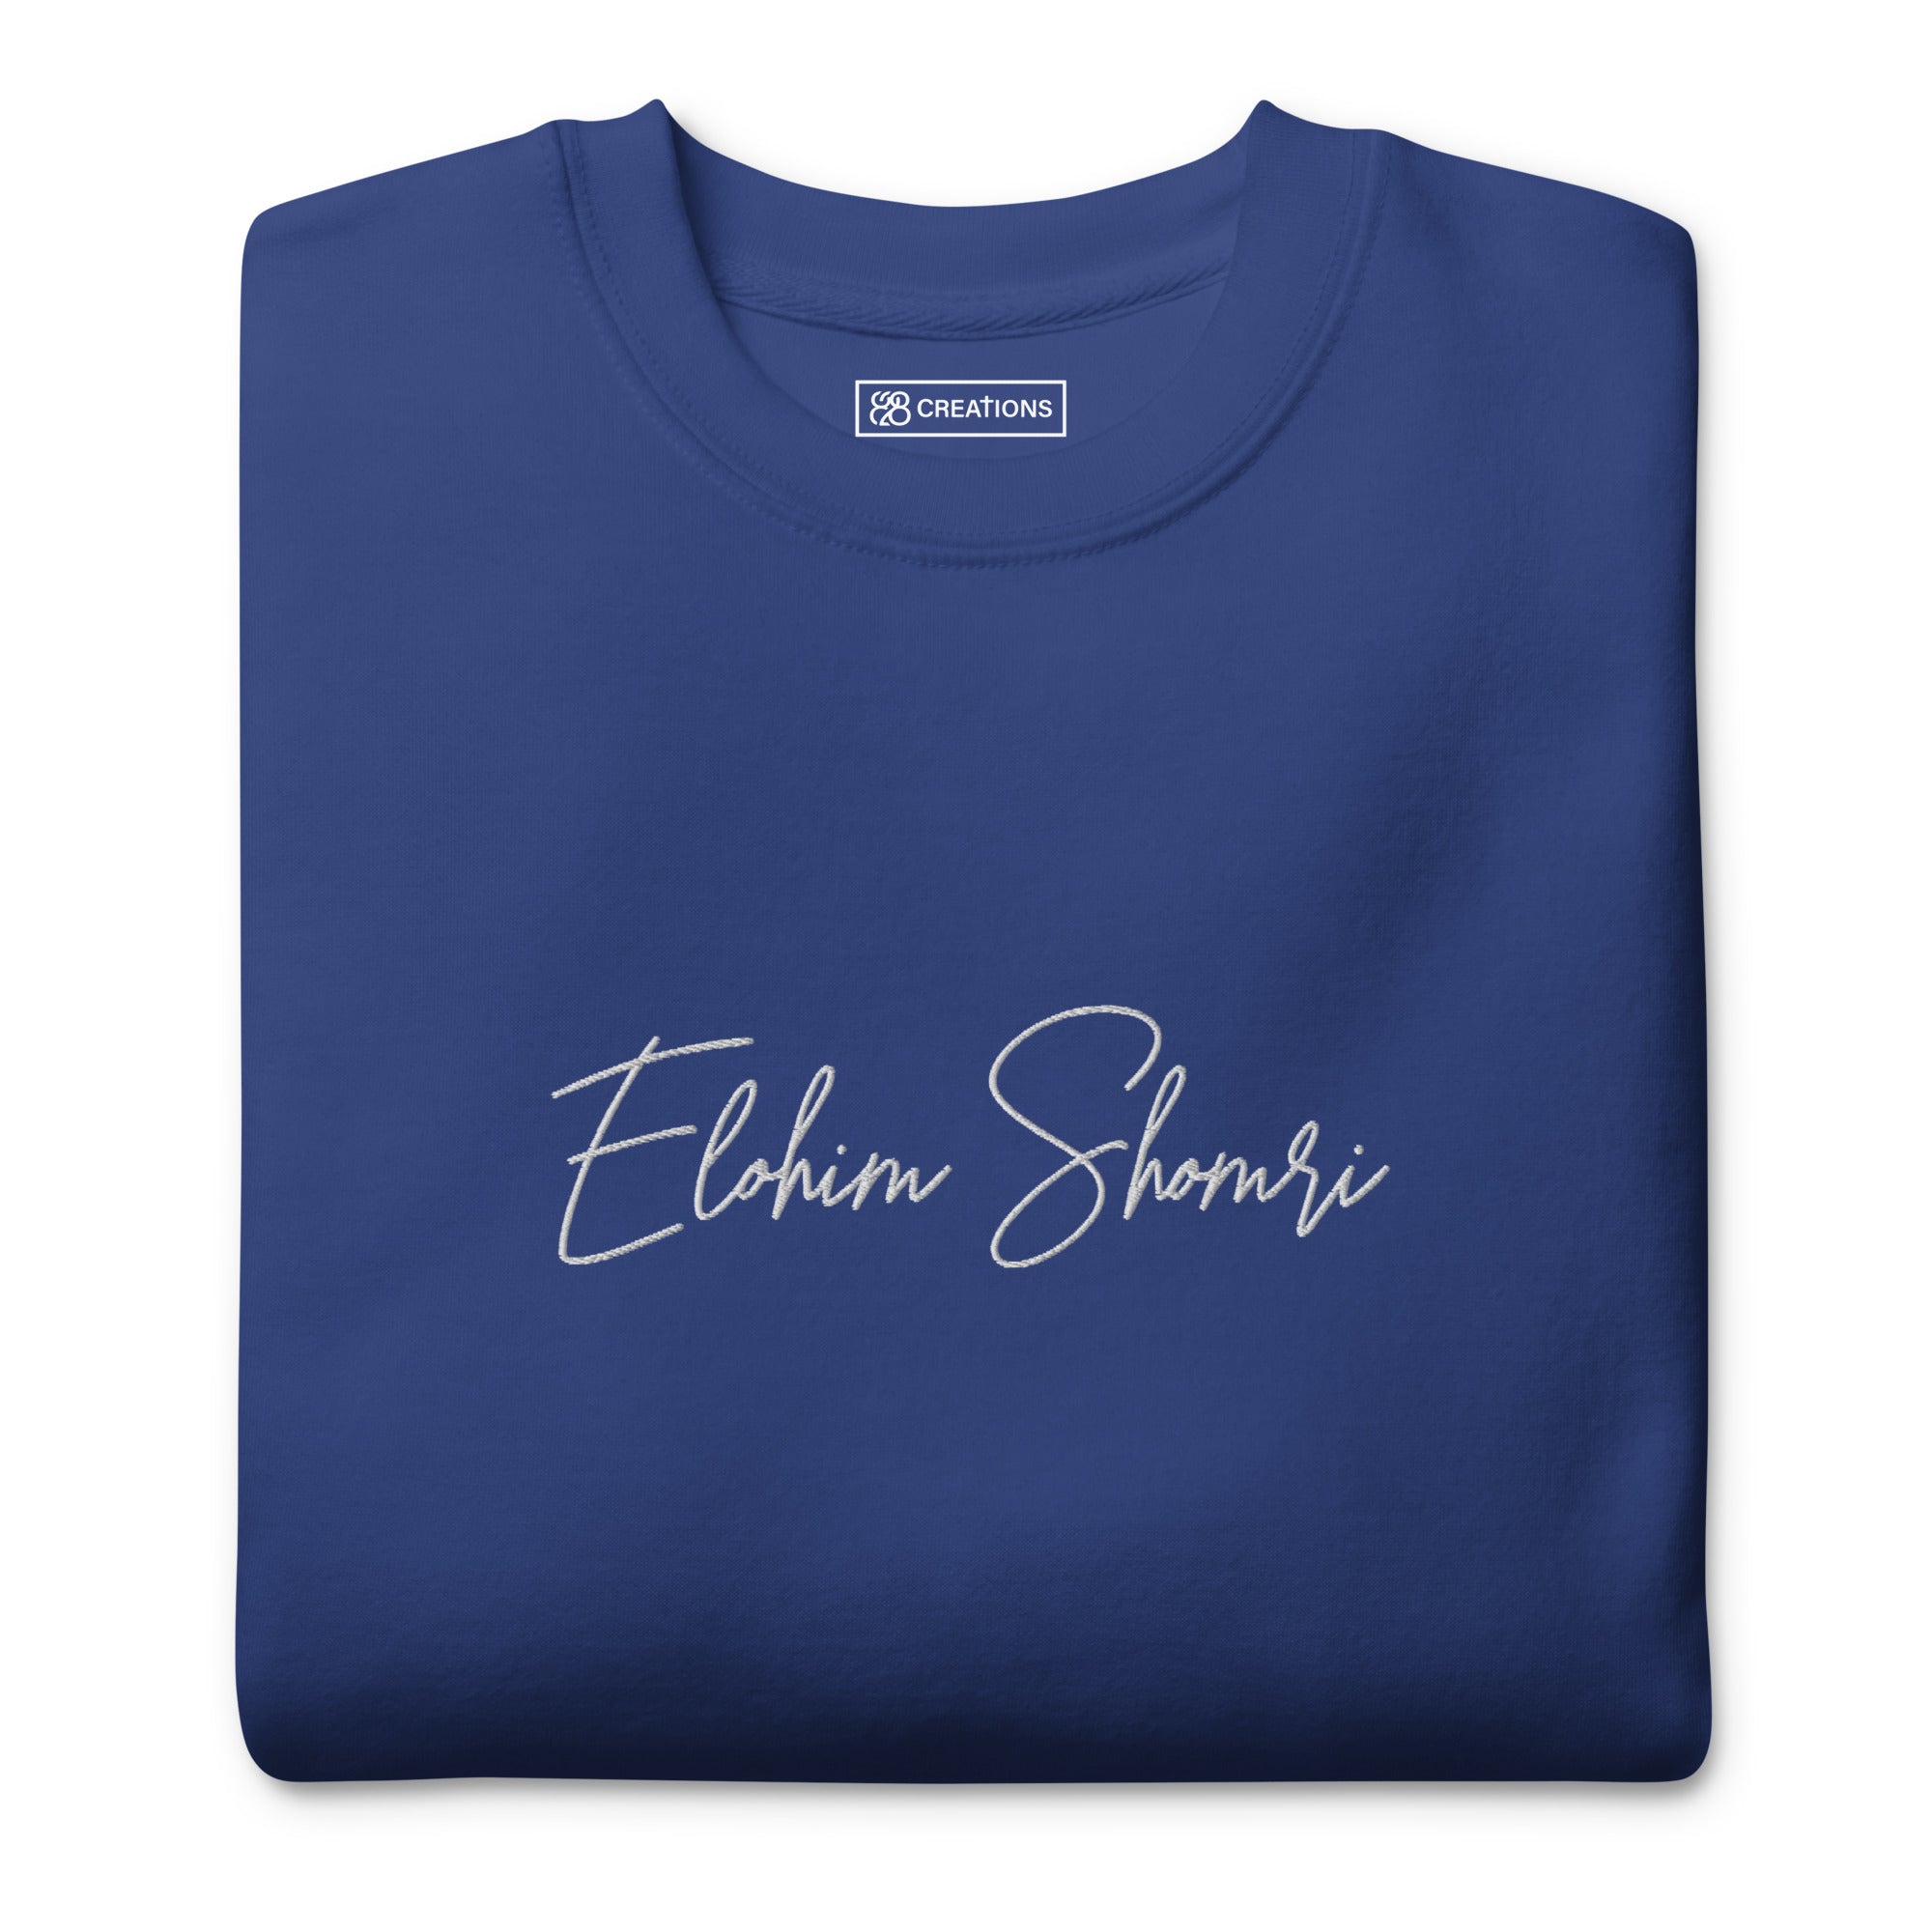 Elohim Shomri Embroidered Crew Neck Sweatshirt